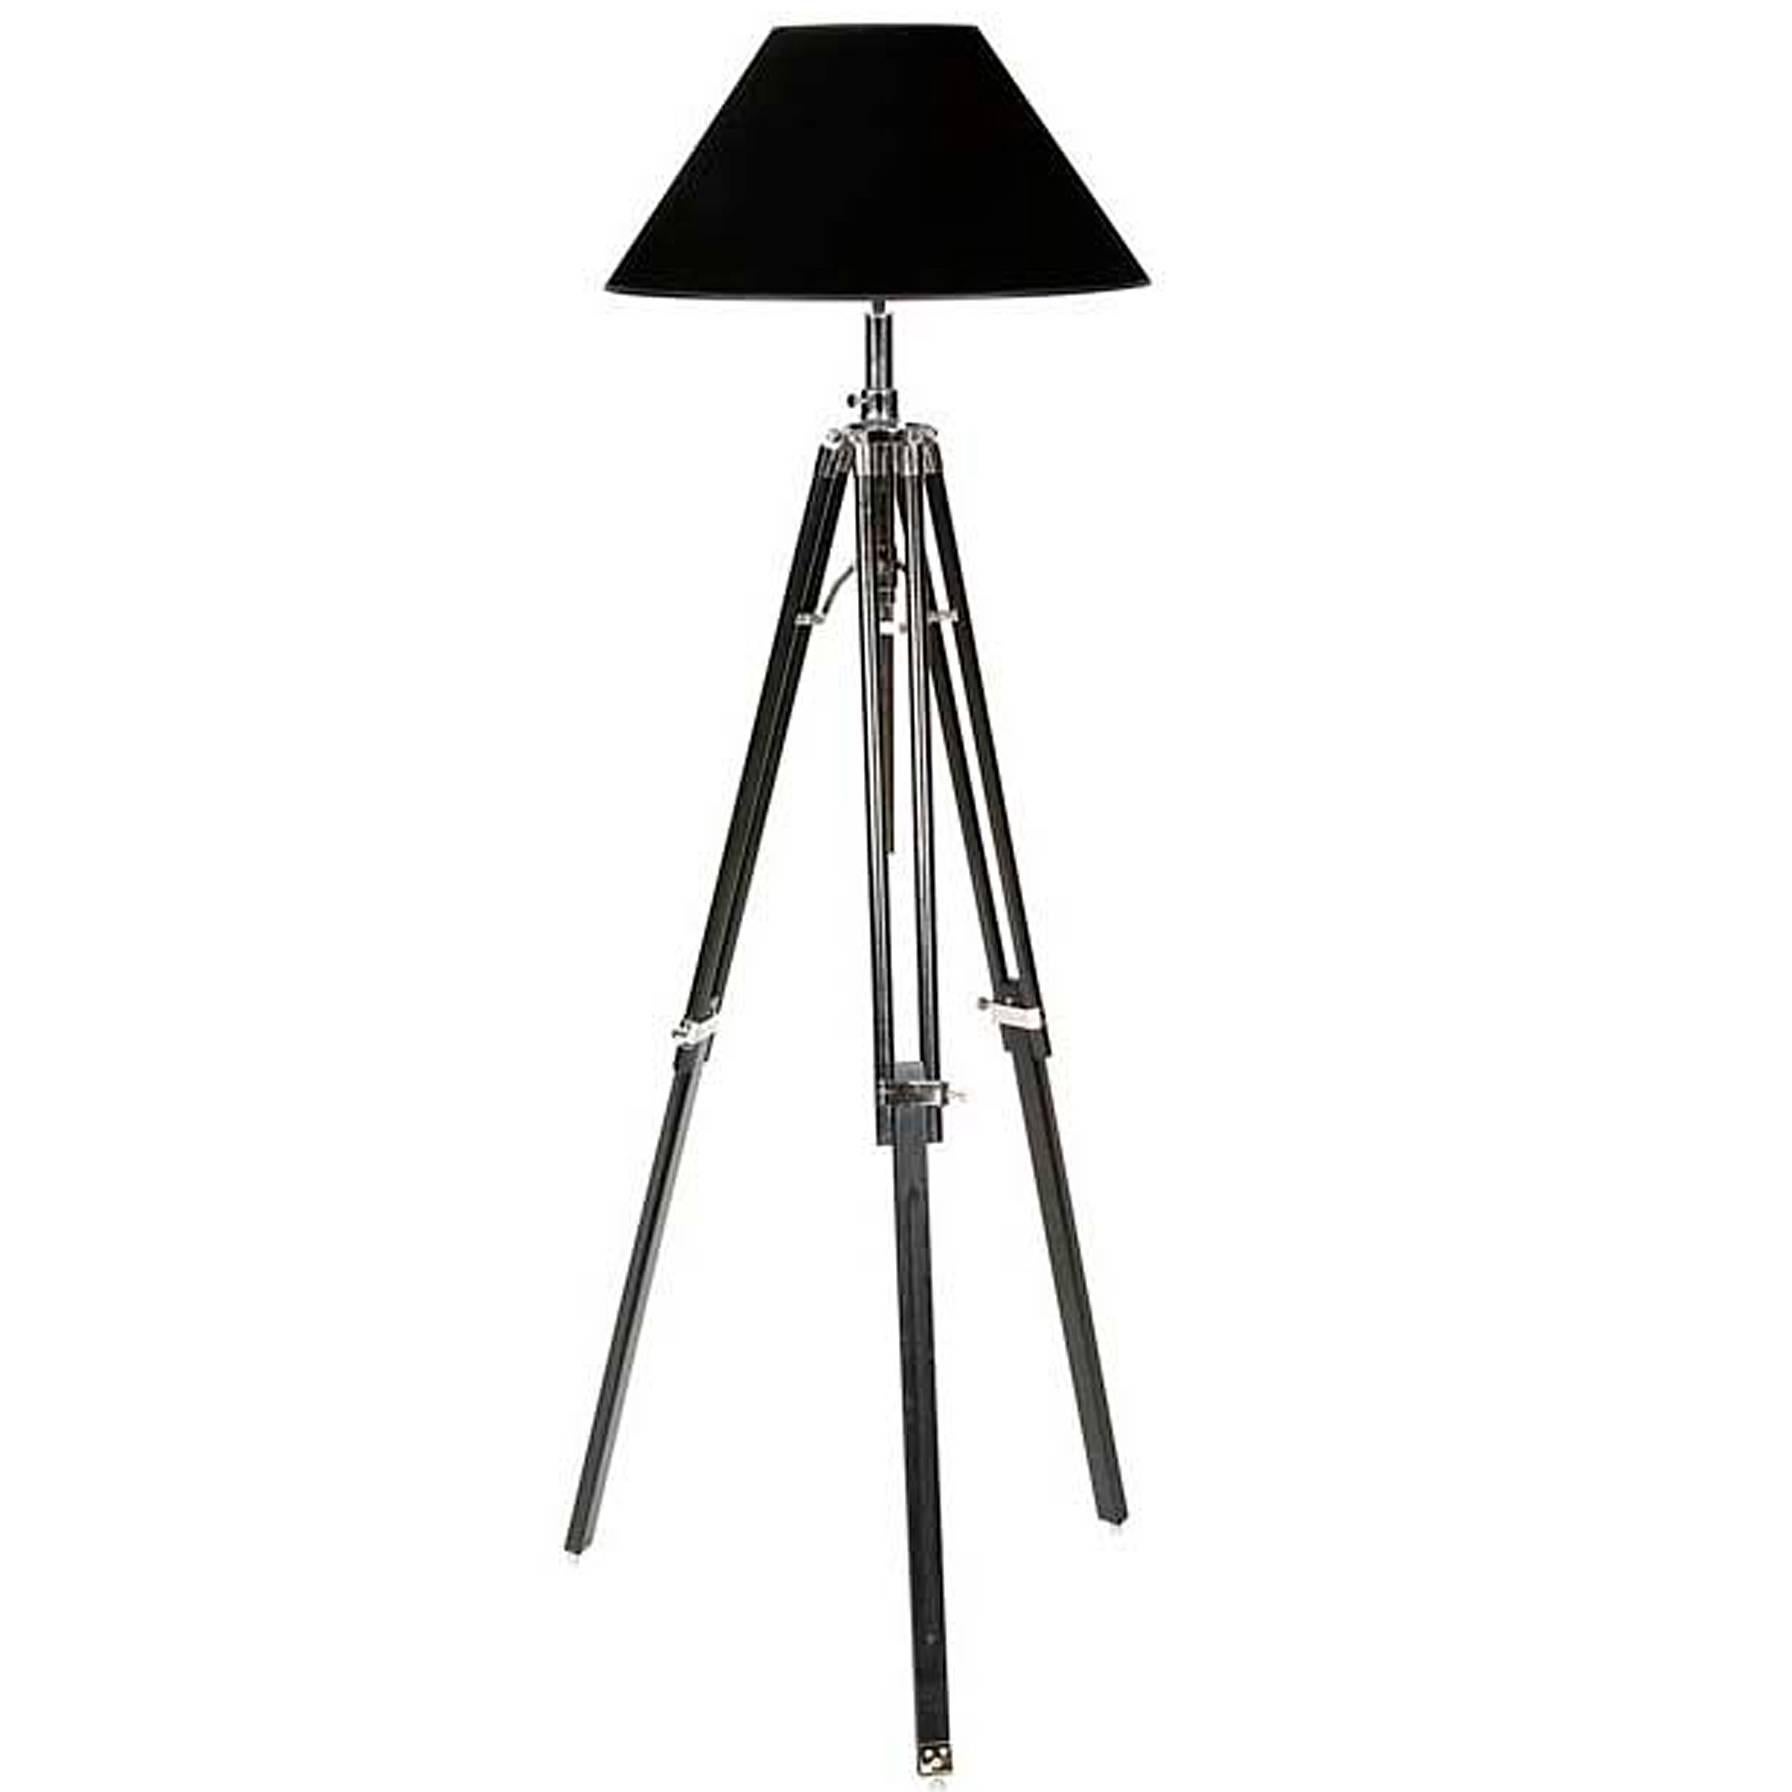 Tripod Floor Lamp with Telescopic Black Legs and Nickel